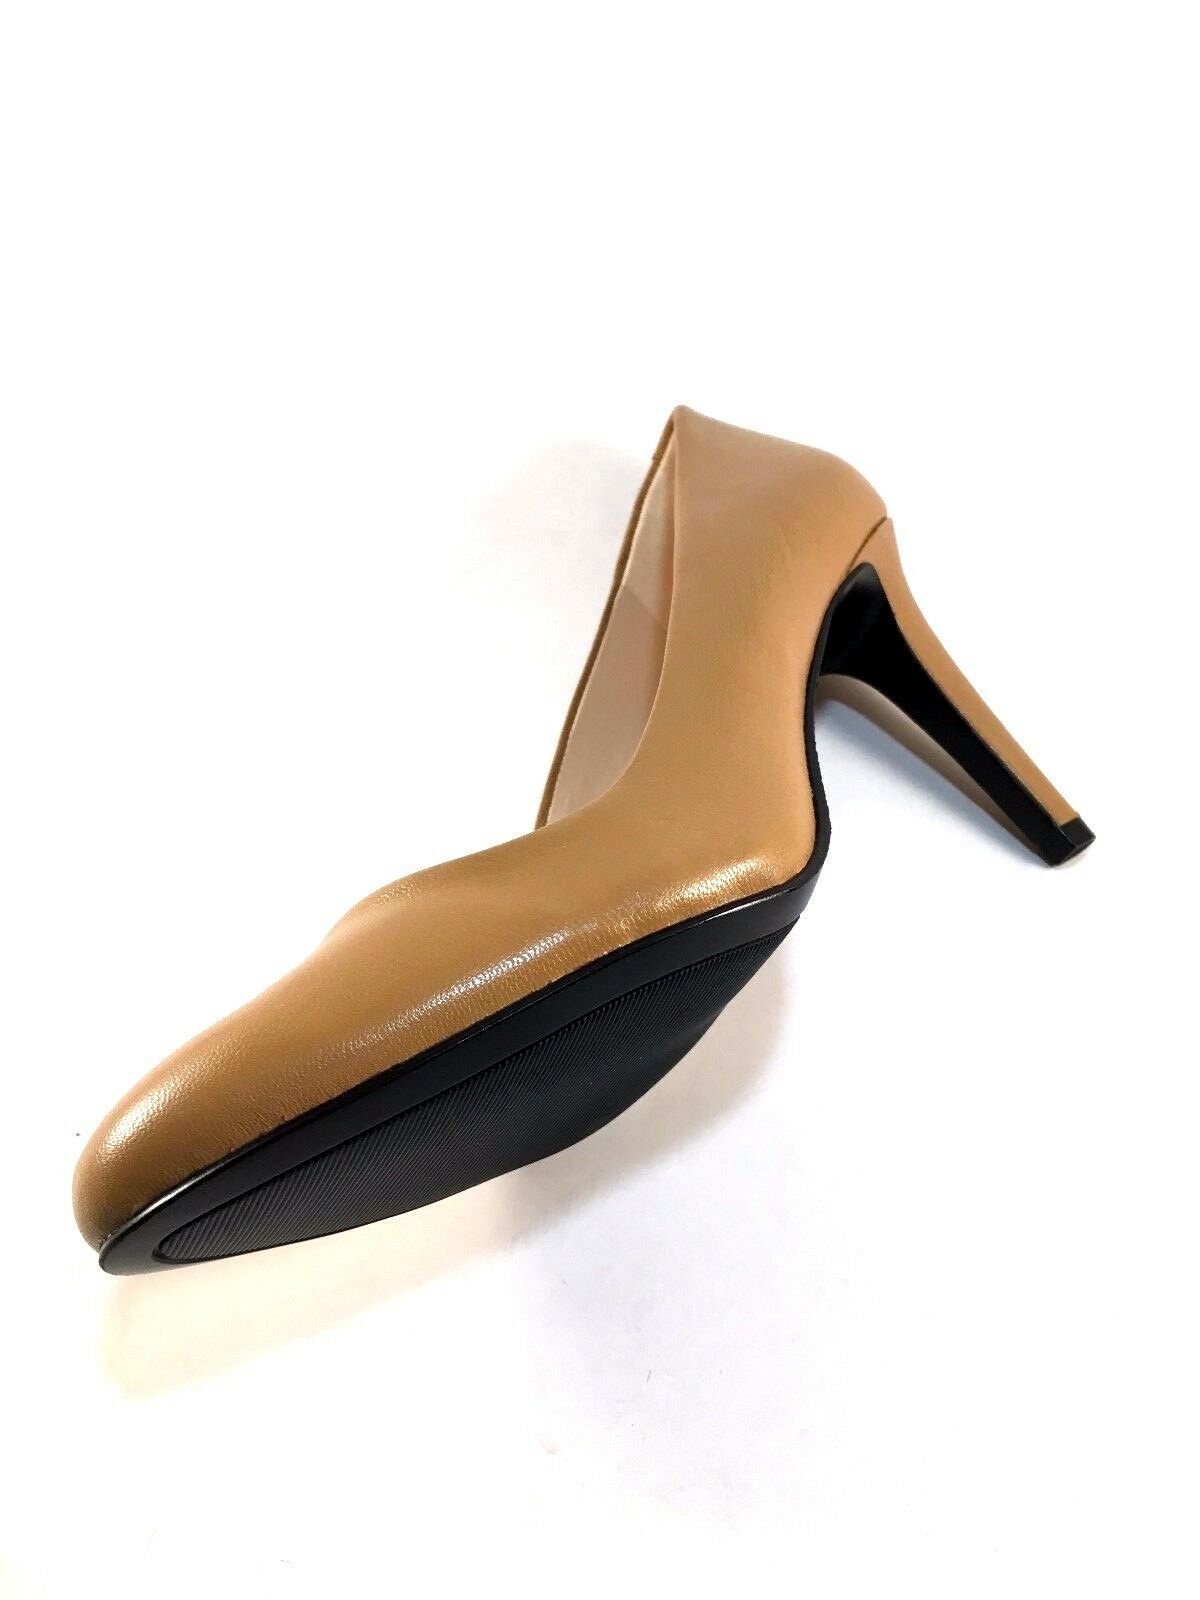 Nine West Handjive Leather High Heel Round Toe Pumps Choose Sz/Color